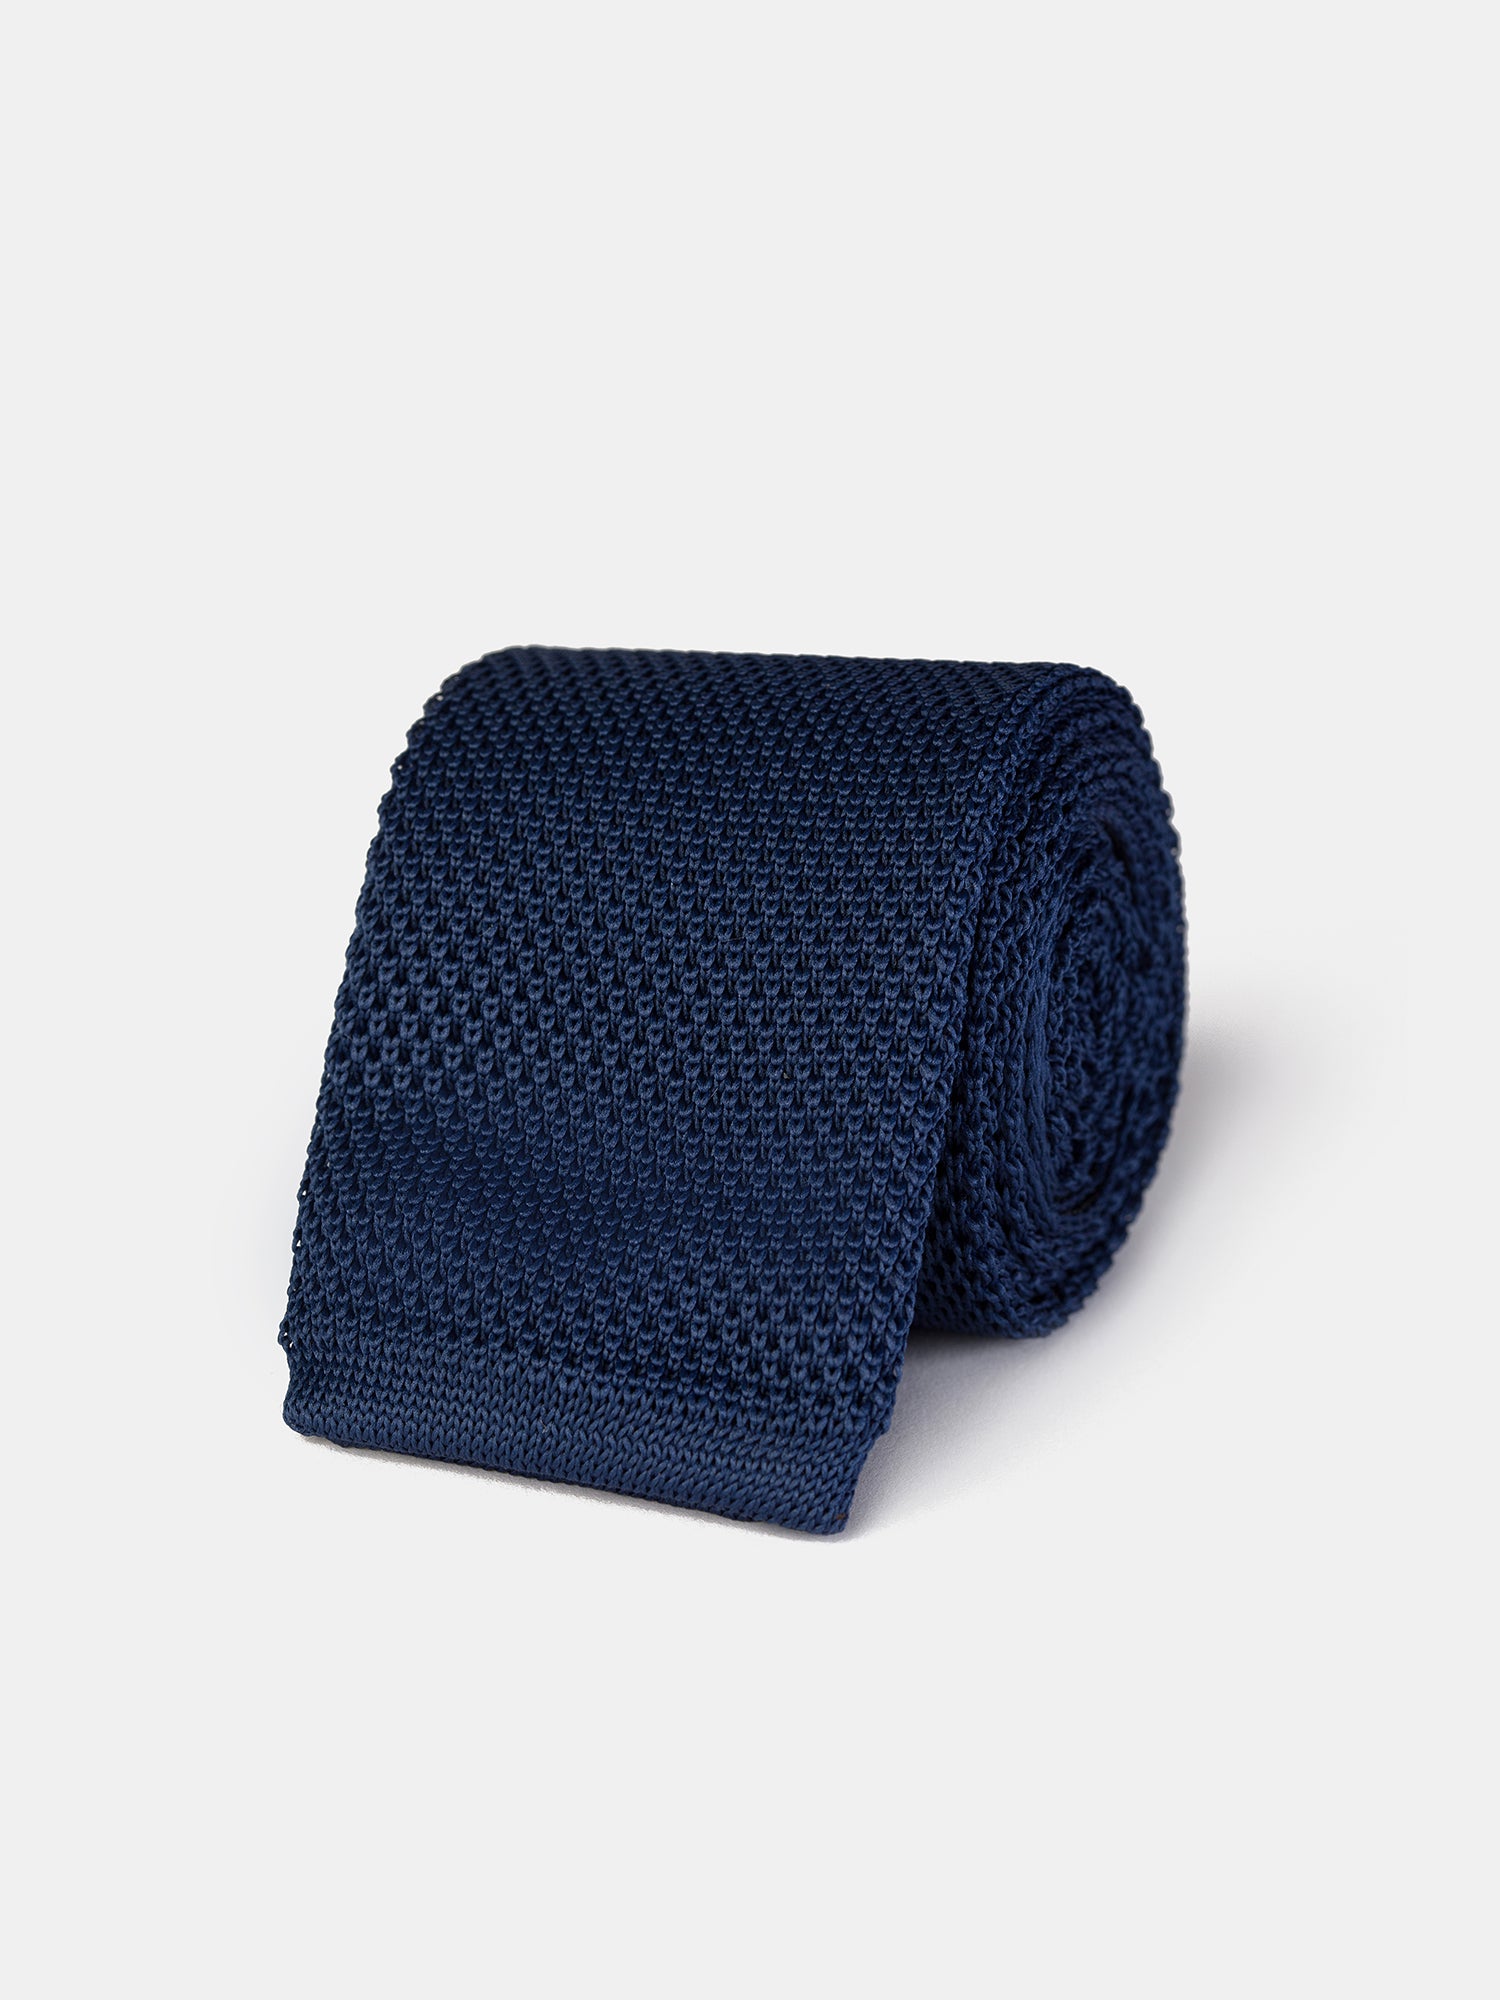 Navy Knitted Tie 6cm